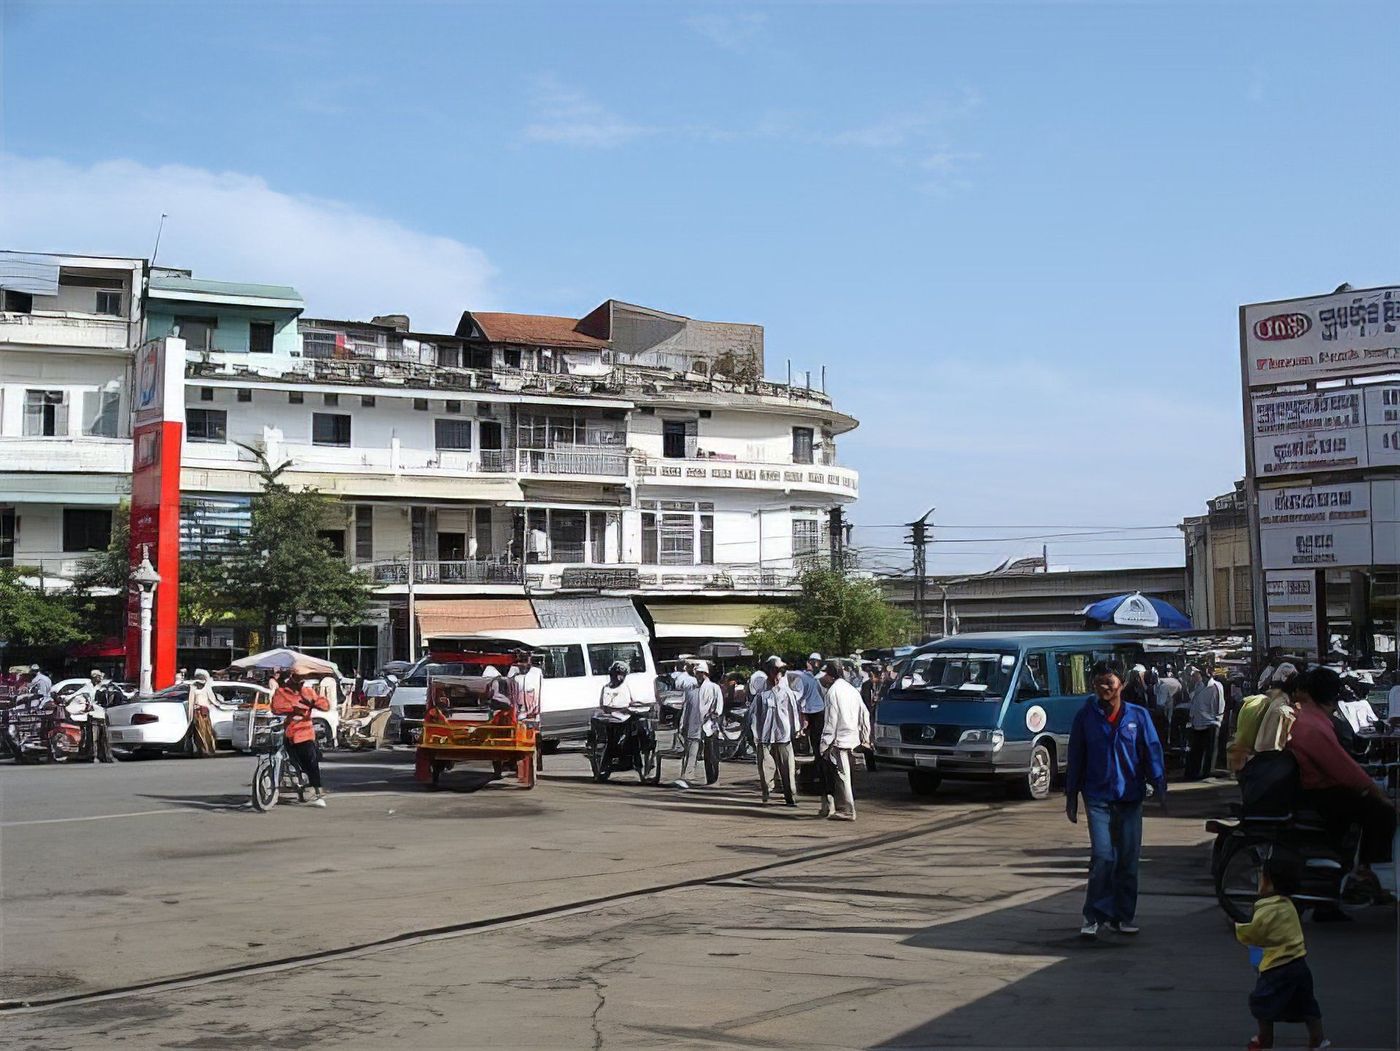 Gare routière de Phnom Penh